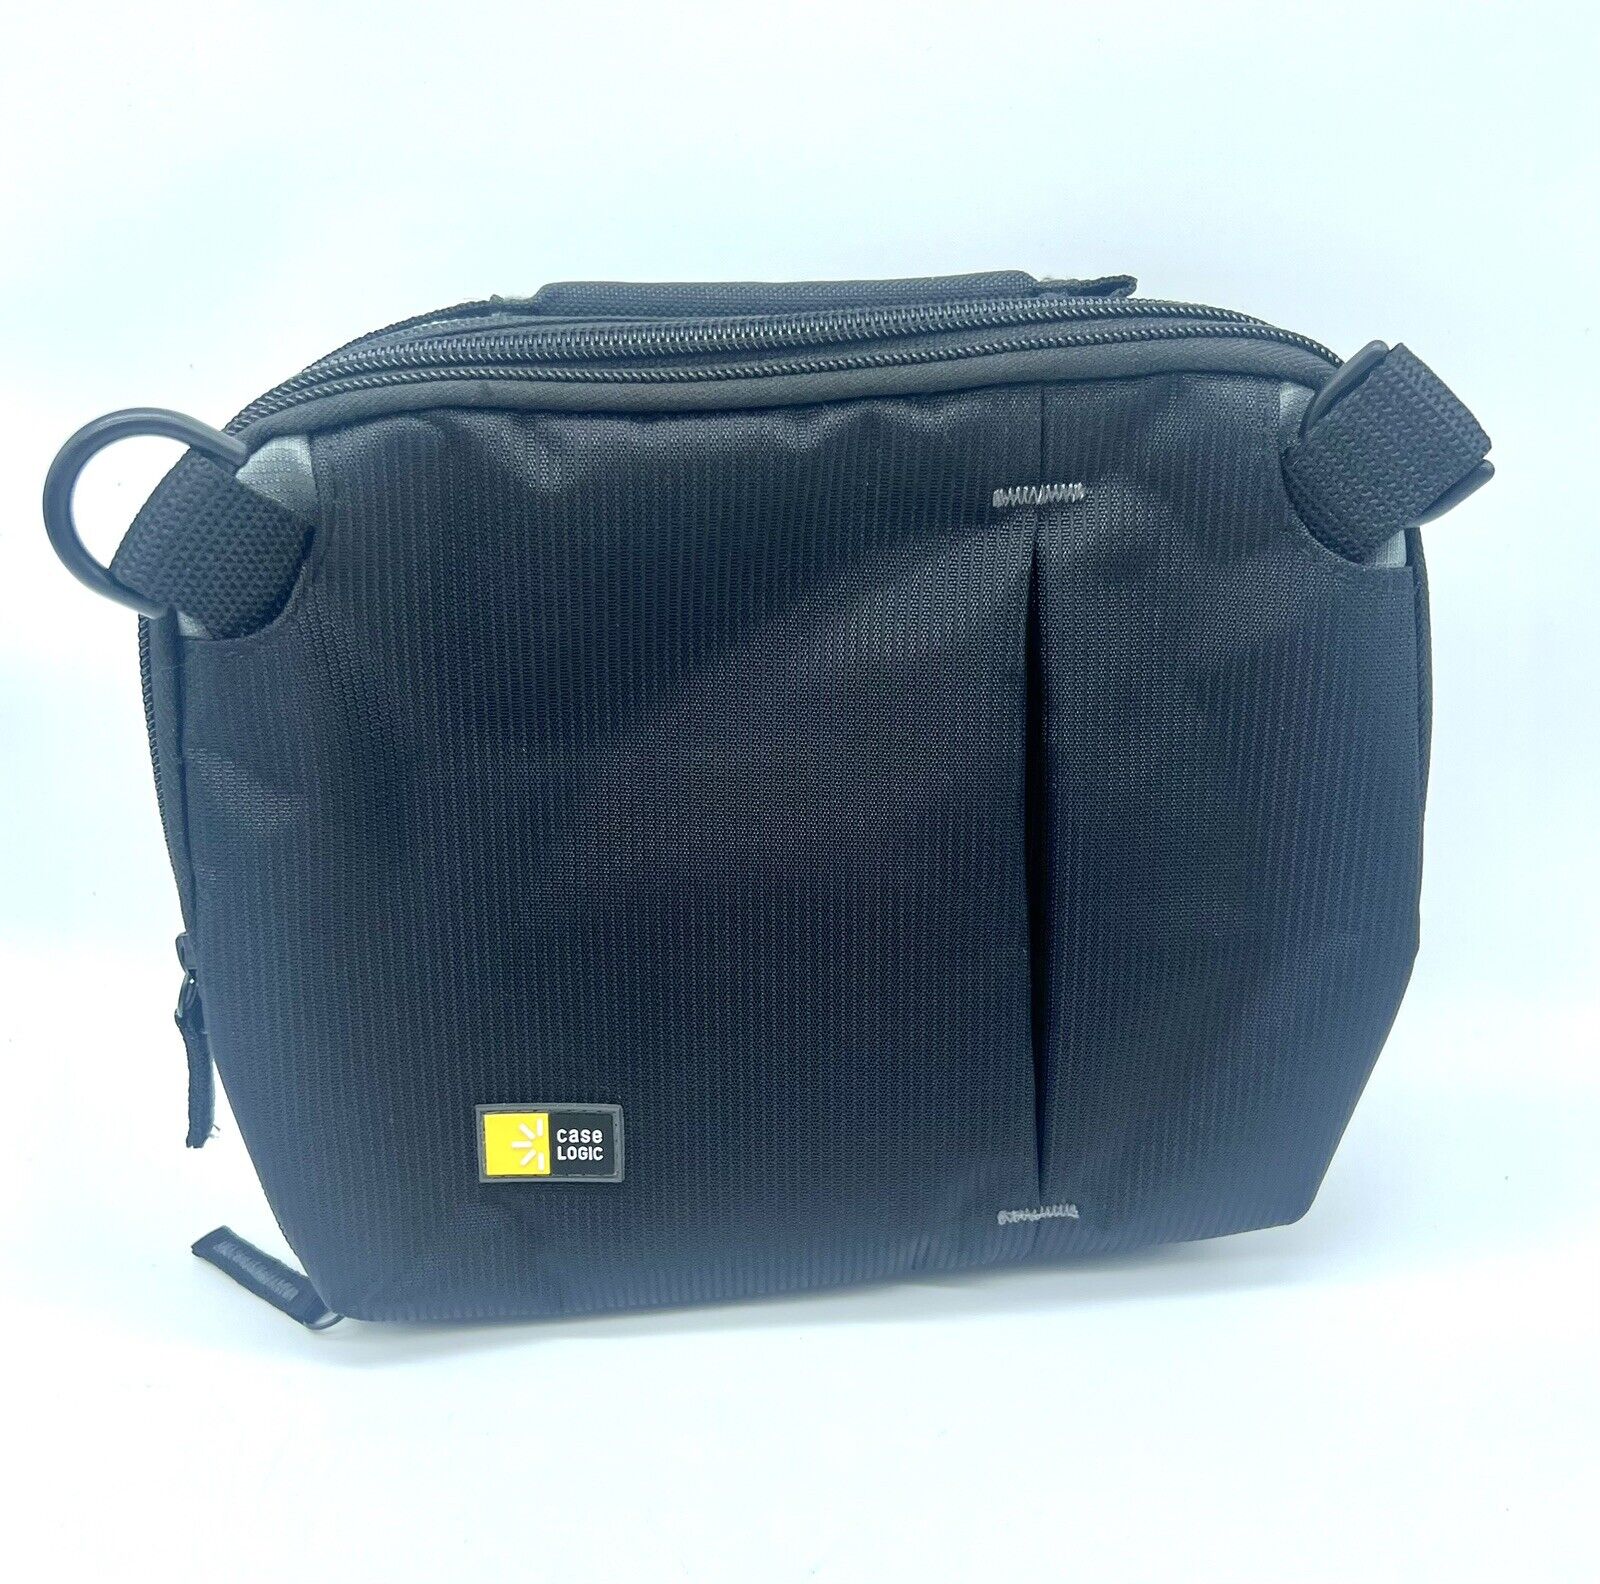 Case Logic Case Bag Black Gray Multi-Pocket Padded Top Handle Discman Multi-use